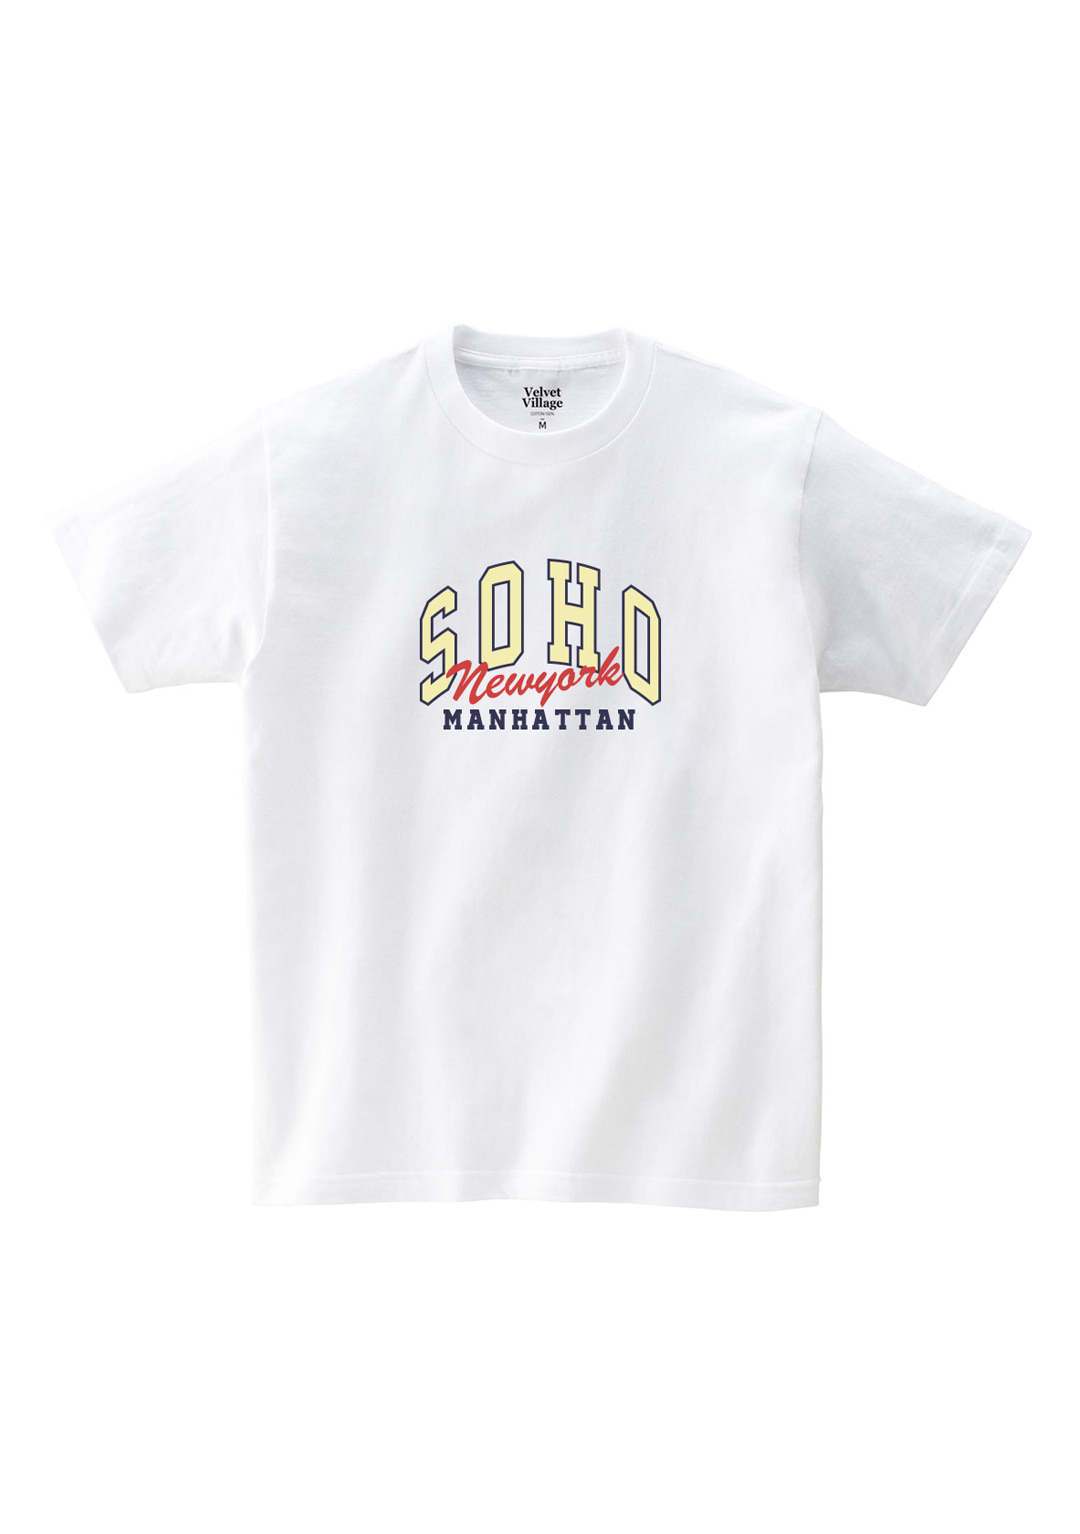 Soho T-shirts (White)